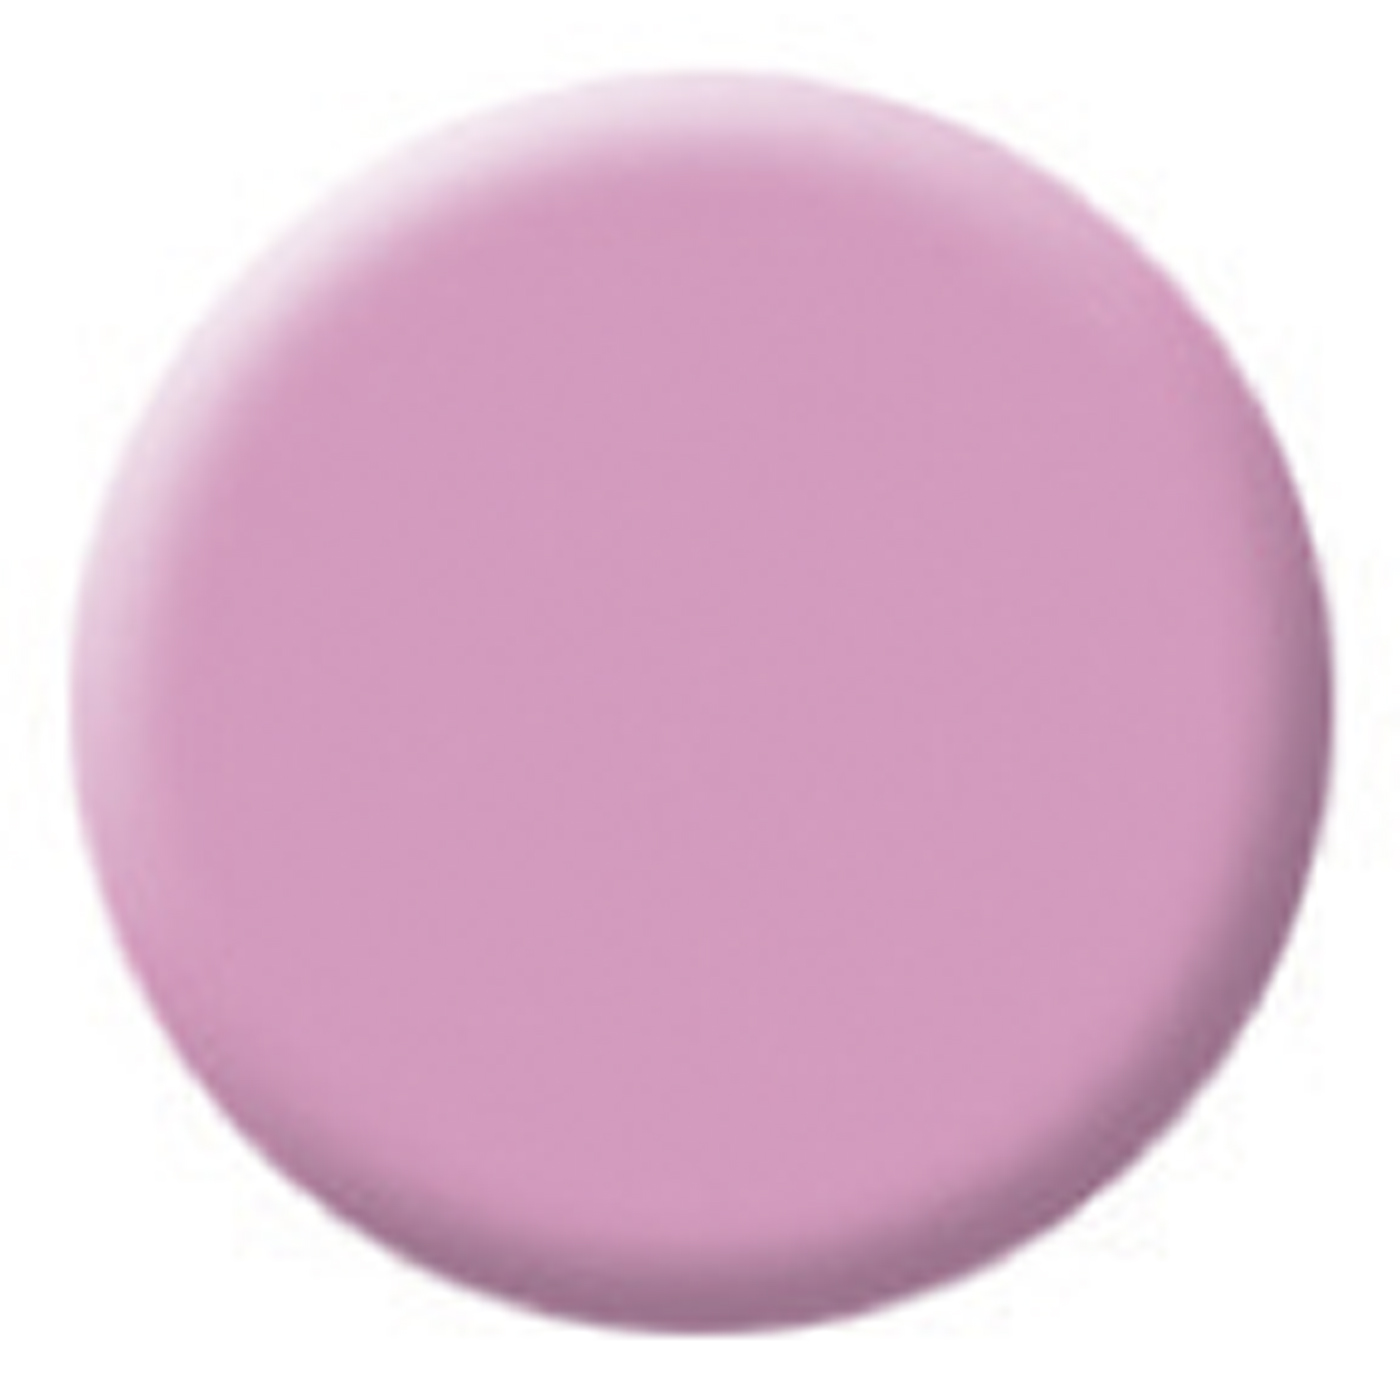 Colorit Trend transparent, pink - 5 g